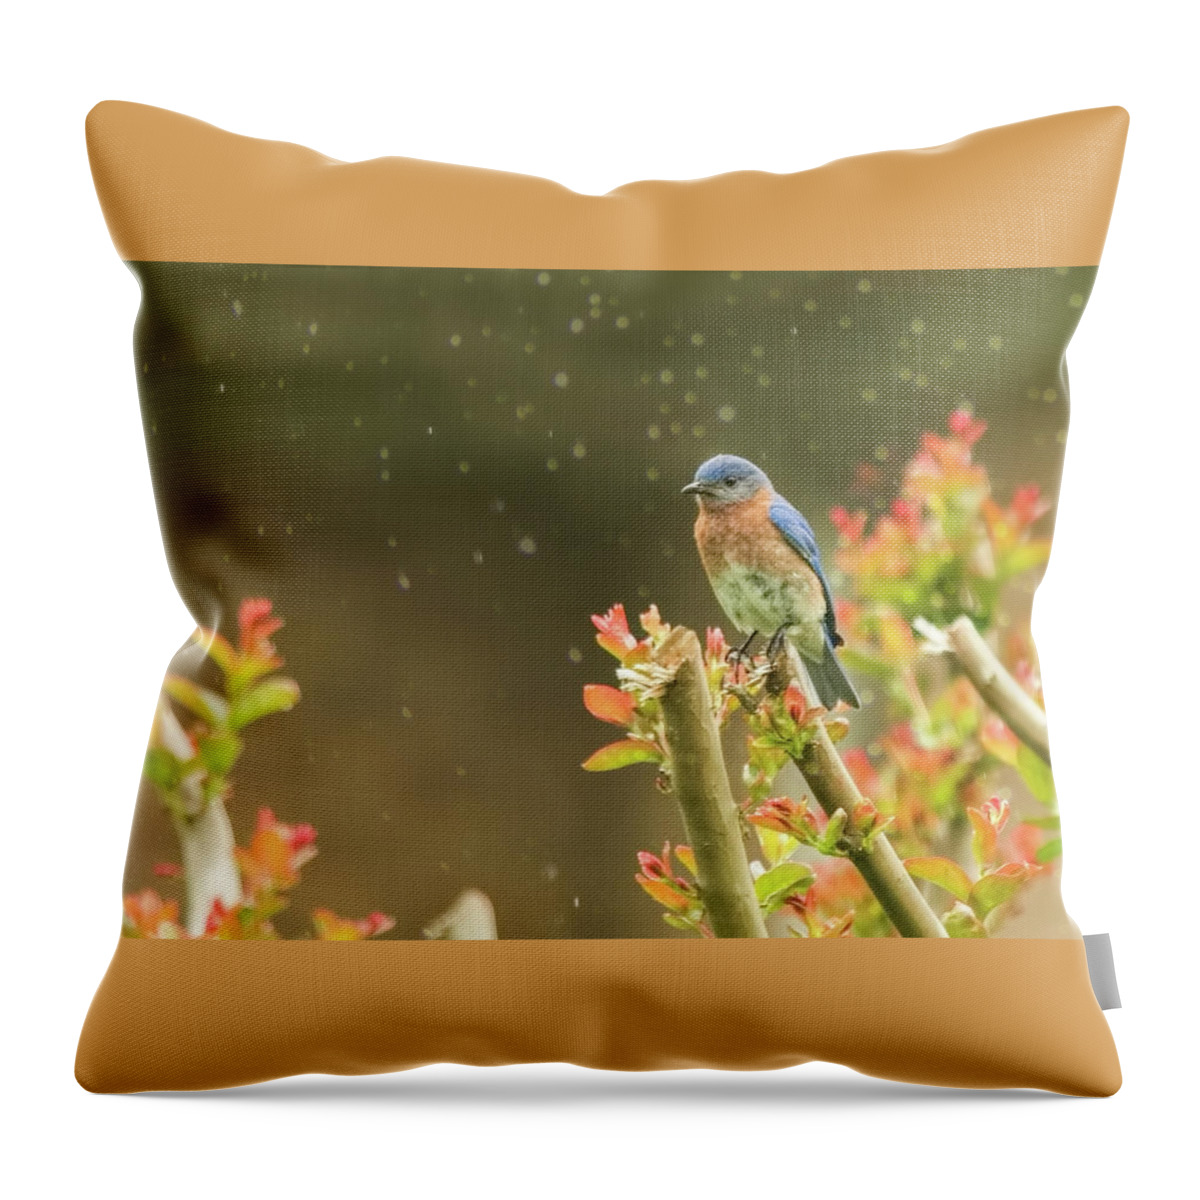 Bluebird In Gentle Rain Throw Pillow featuring the photograph Bluebird in Gentle Rain by Jemmy Archer